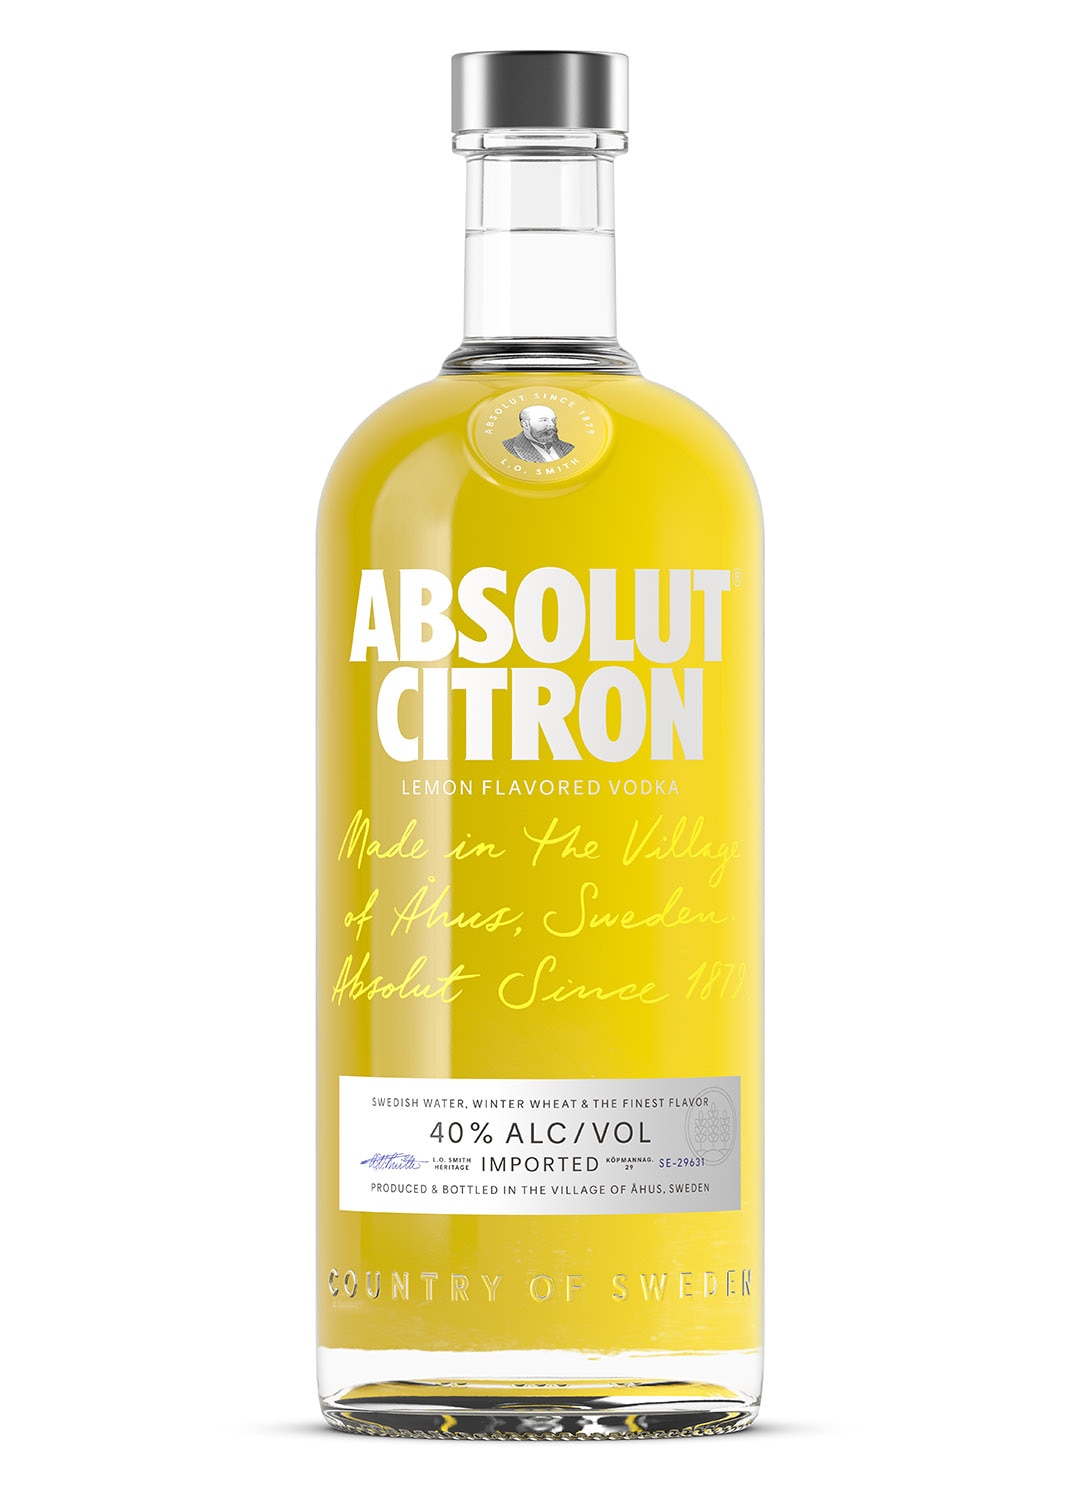 absolut citron 1000ml bottle against white background